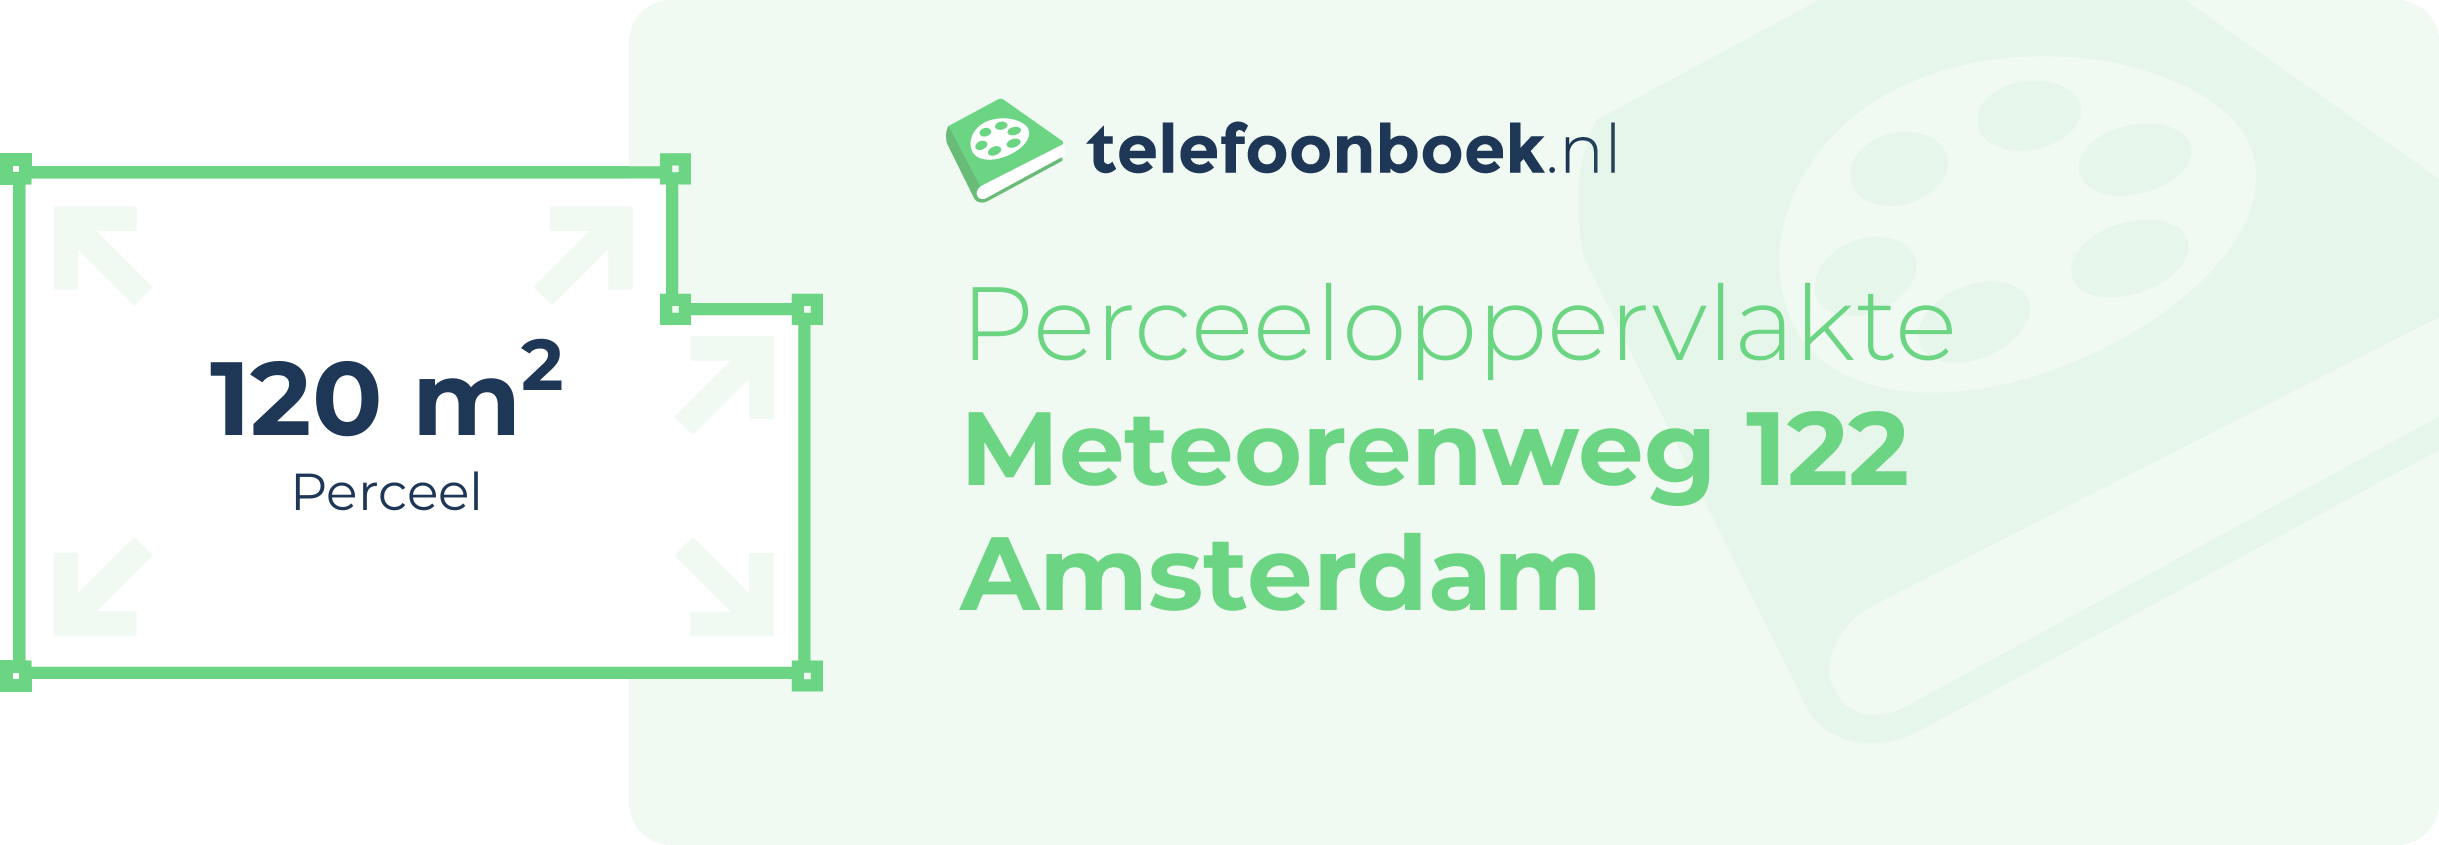 Perceeloppervlakte Meteorenweg 122 Amsterdam